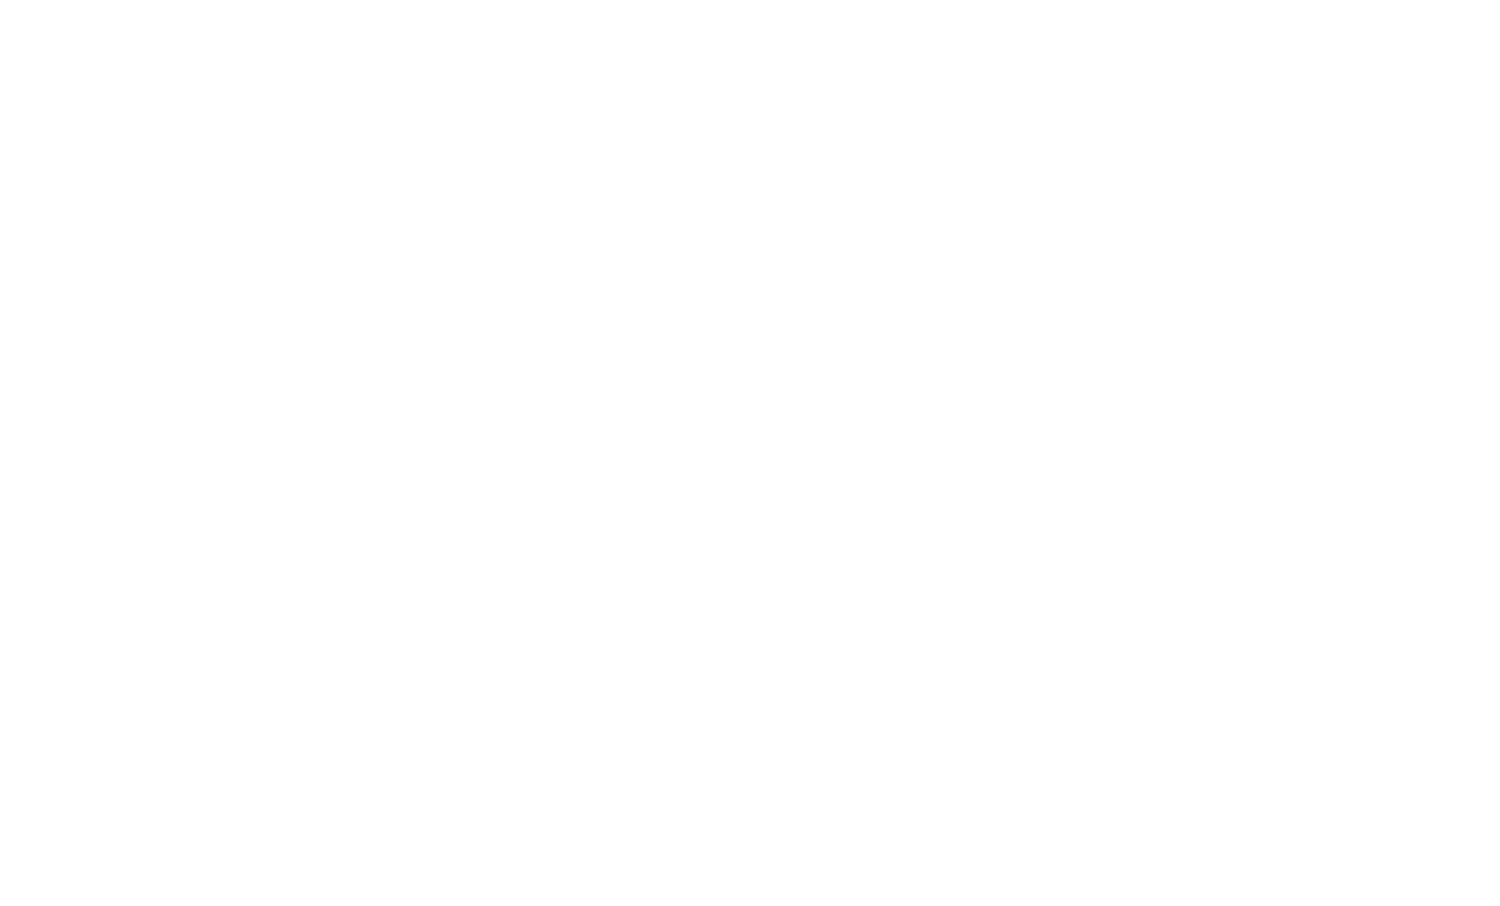 Simon's House